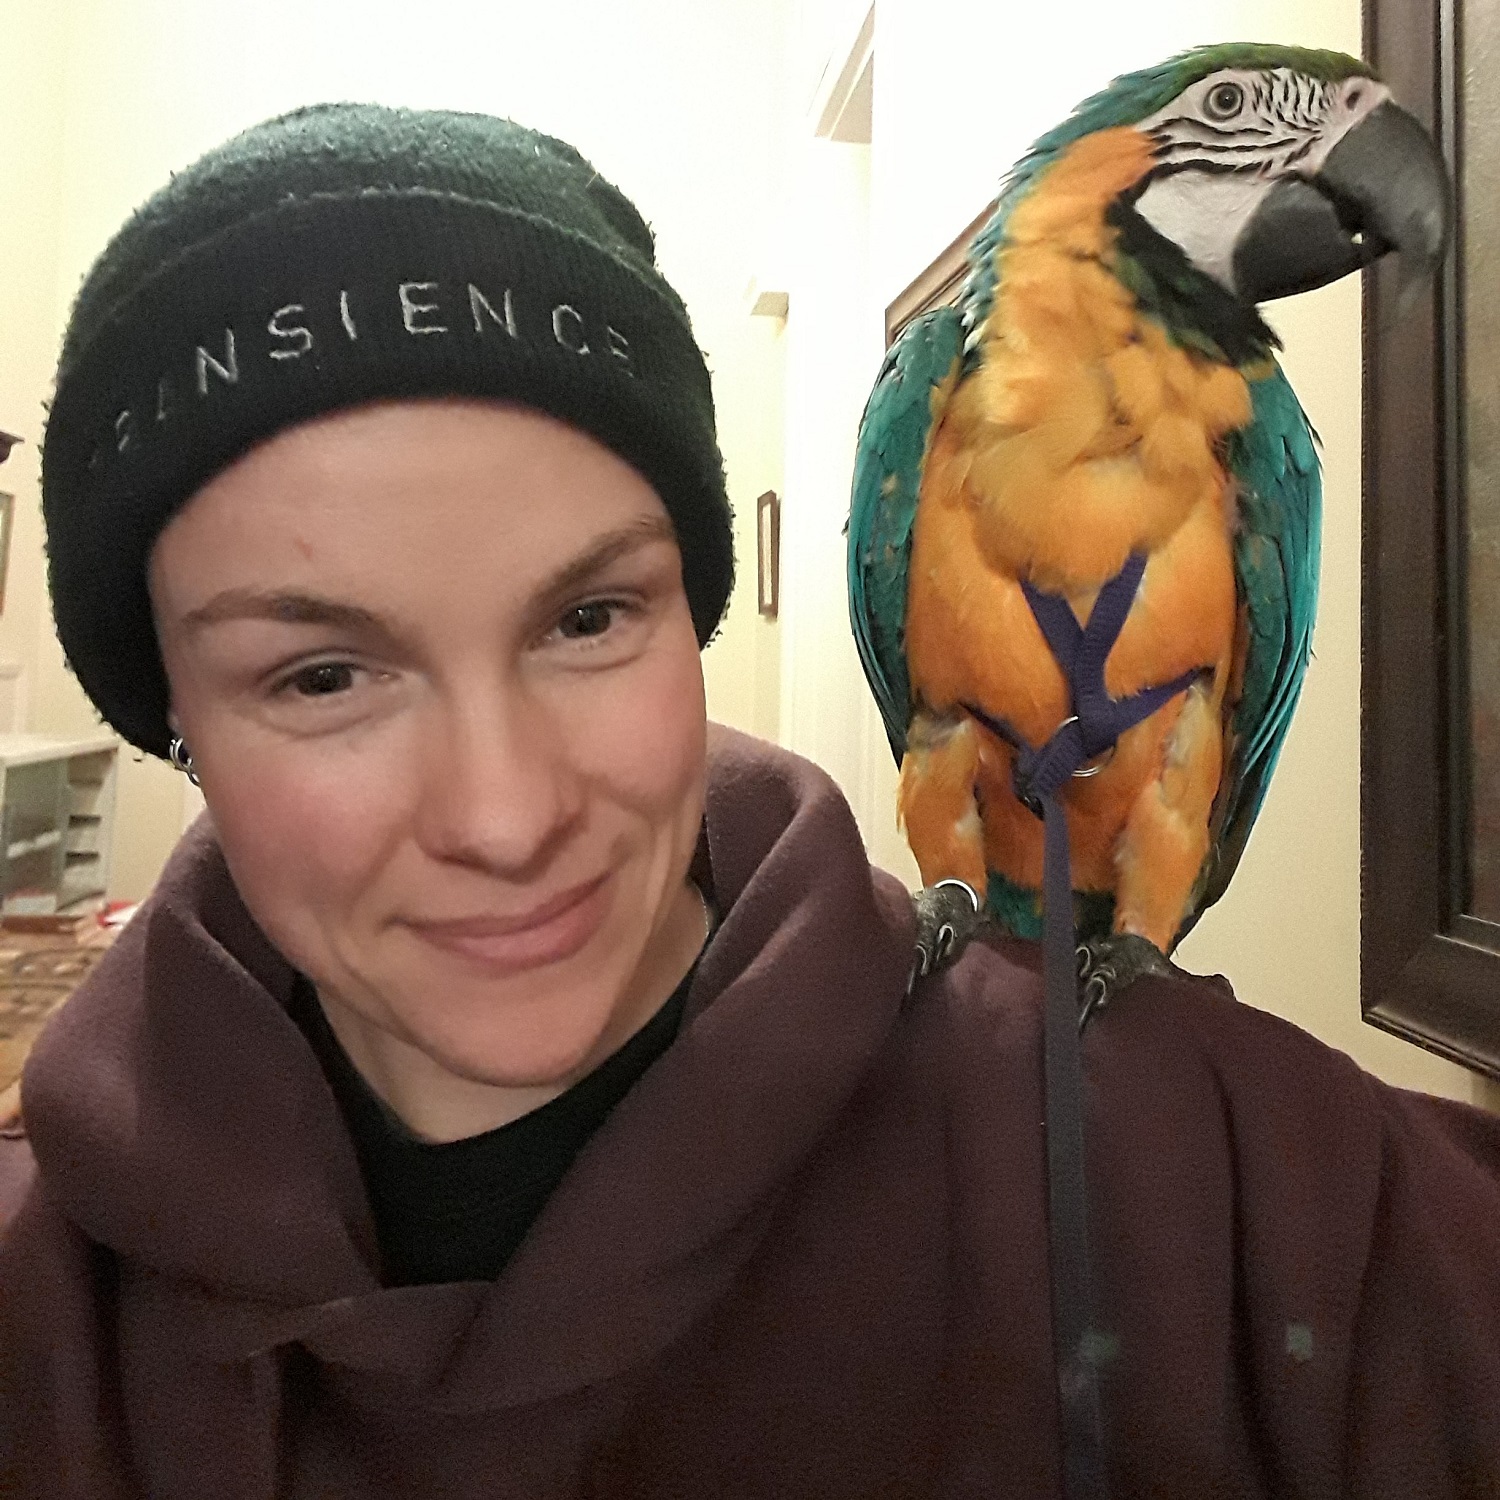 maja jensen with a parrot